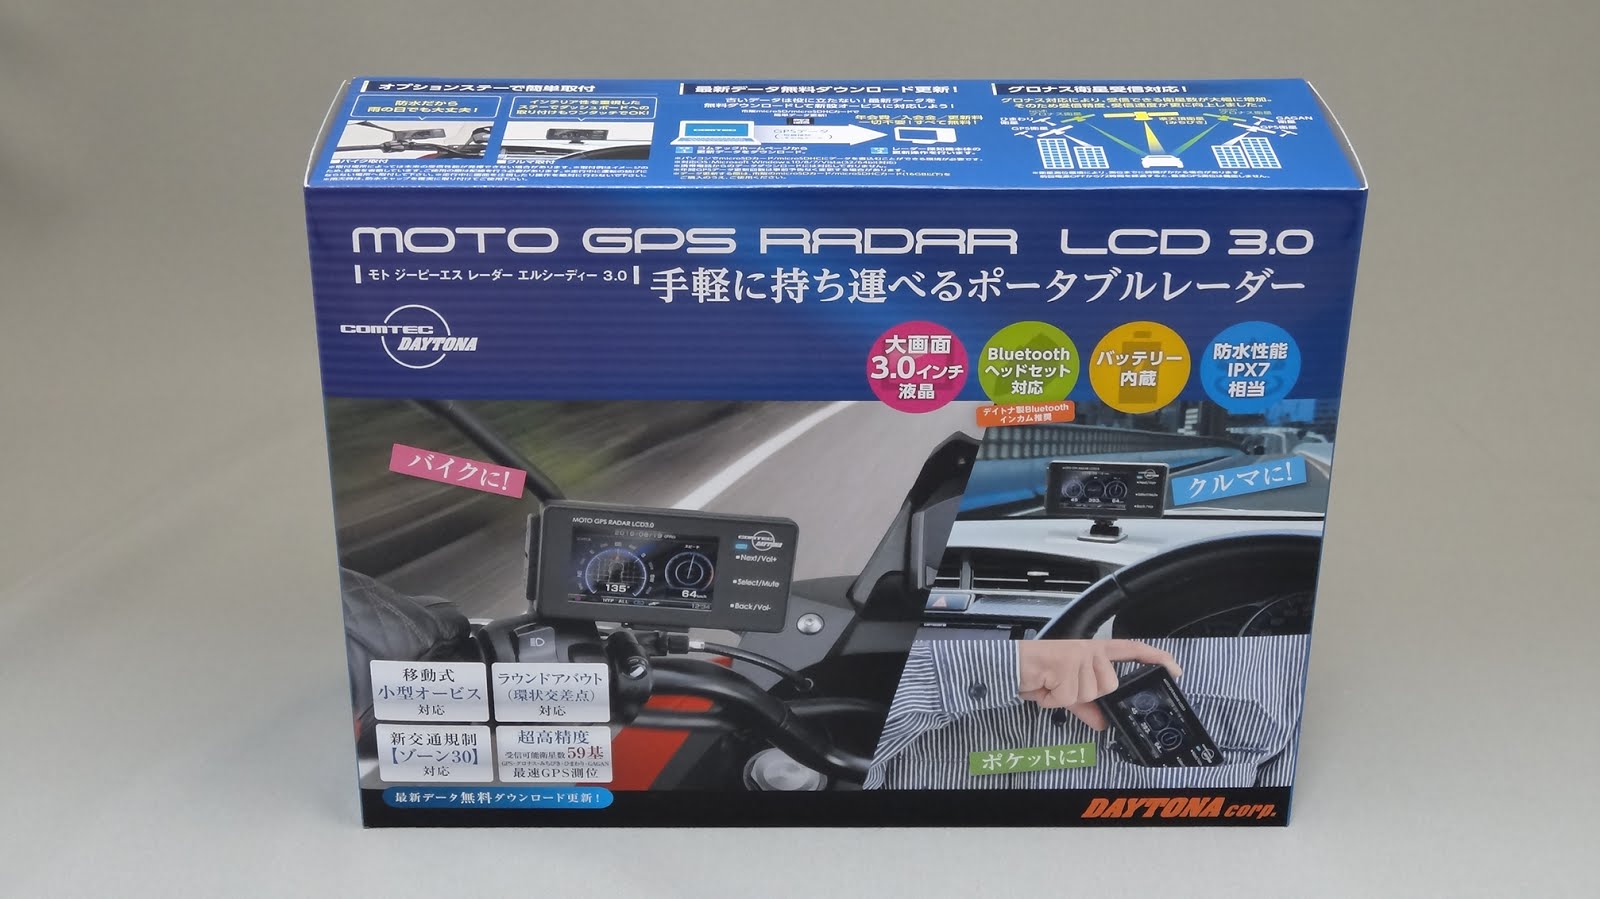 CBR-RRログ: デイトナ MOTO GPS RADAR LCD 3.0 を買ってみた